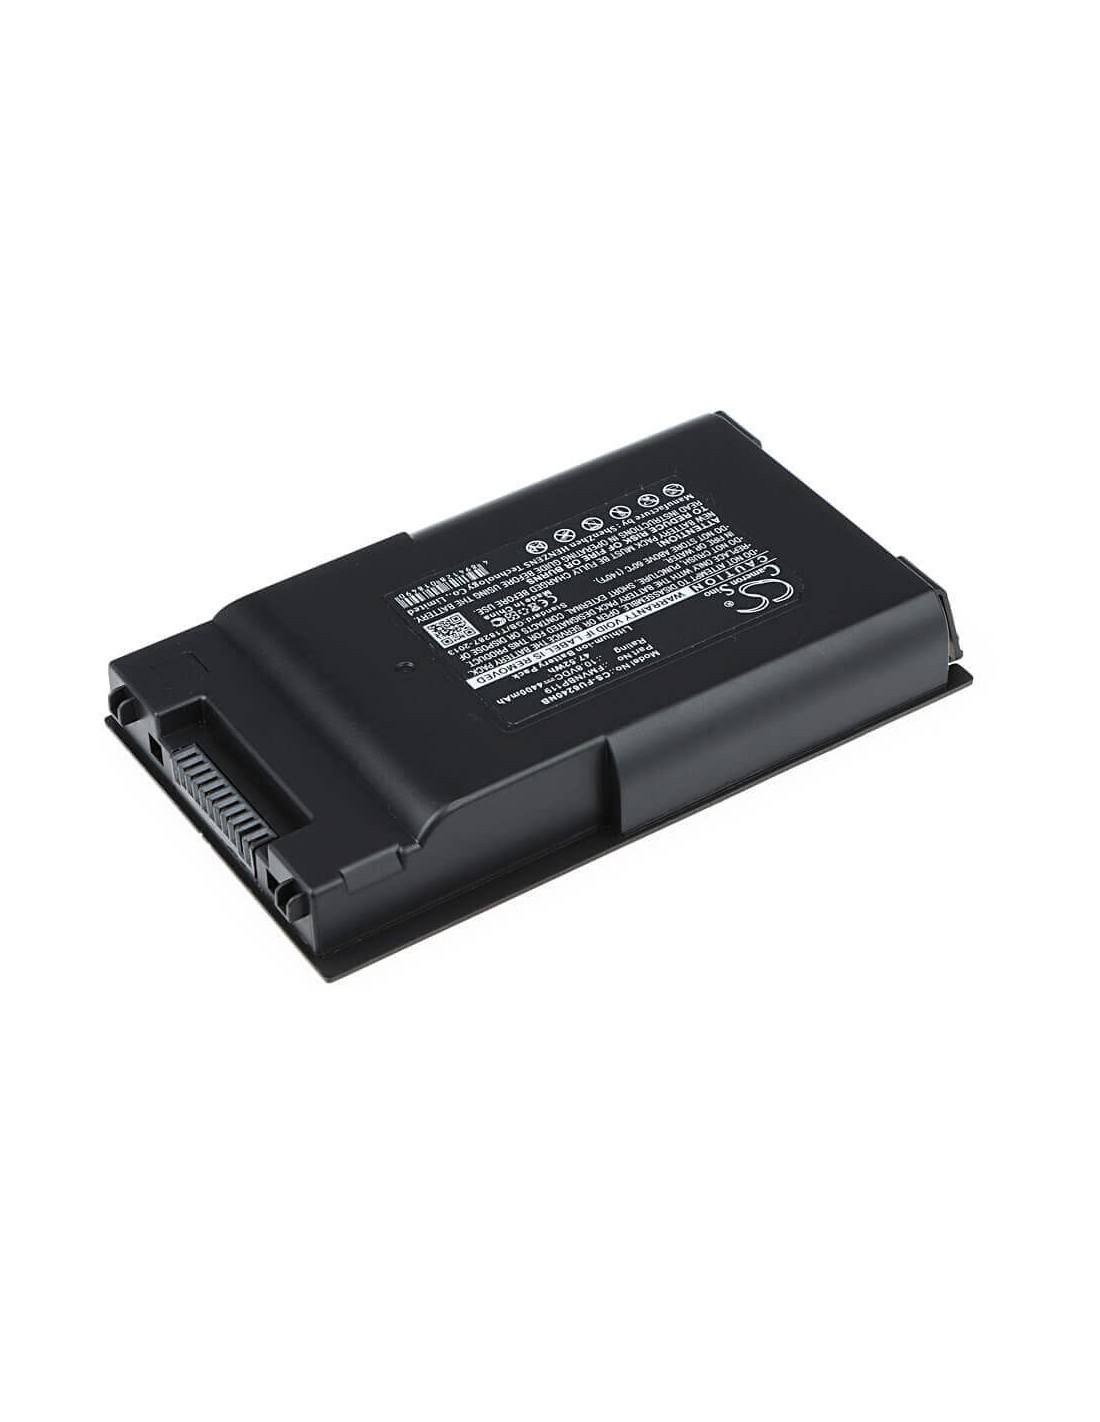 Black Battery for Fujitsu Fmv-biblo Mg50ln, Fmv-biblo Mg50kn, Lifebook S6000 10.8V, 4400mAh - 47.52Wh